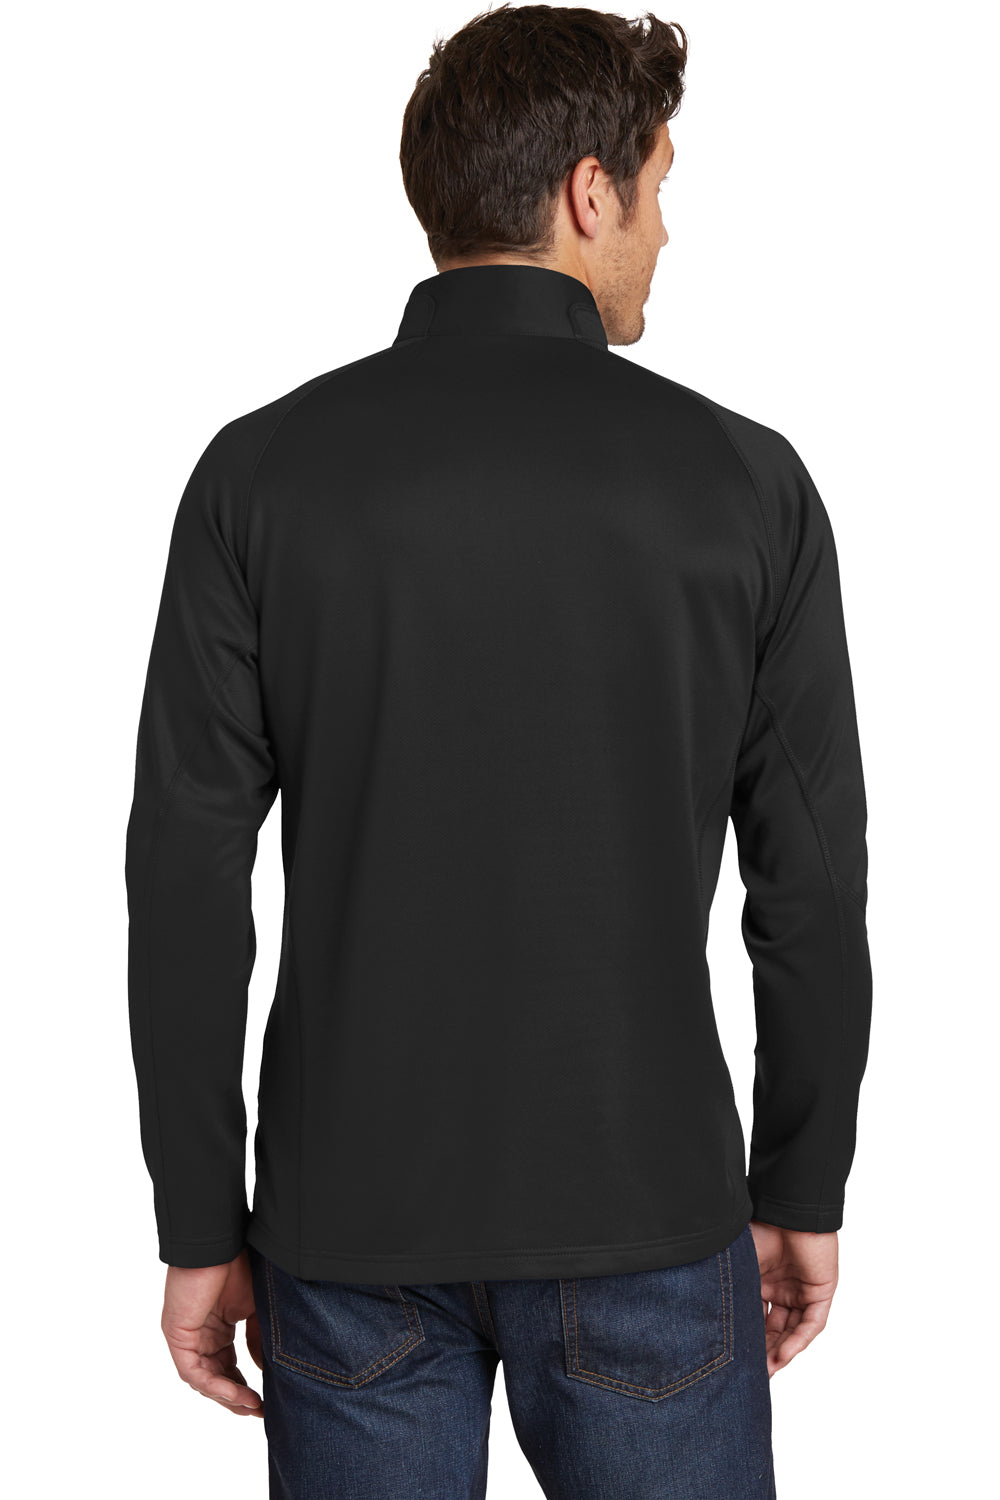 Eddie Bauer EB234 Mens Performance Fleece 1/4 Zip Sweatshirt Black Model Back